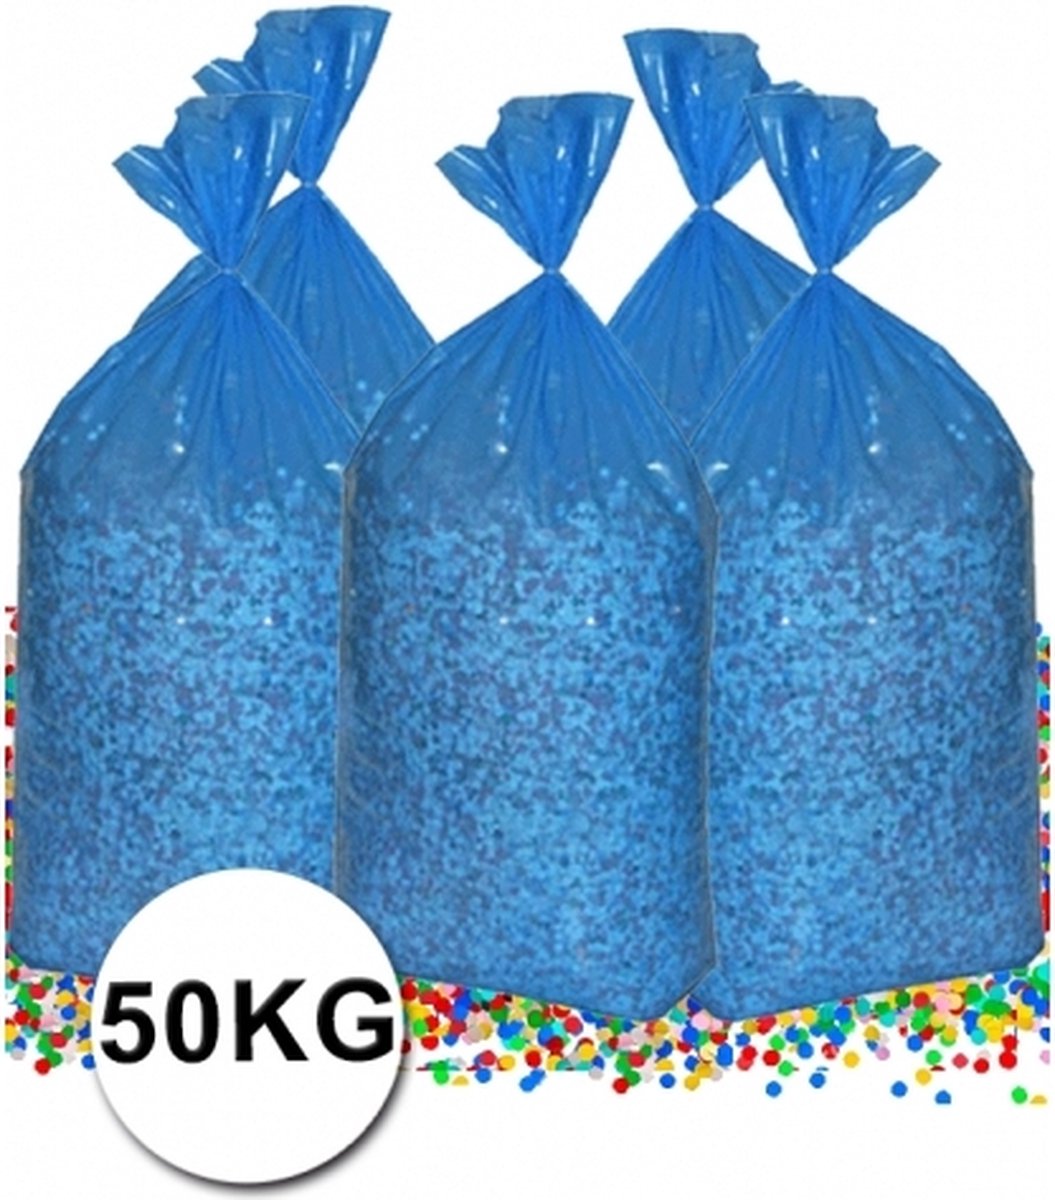 Grootverpakking confetti 50 KG bol.com